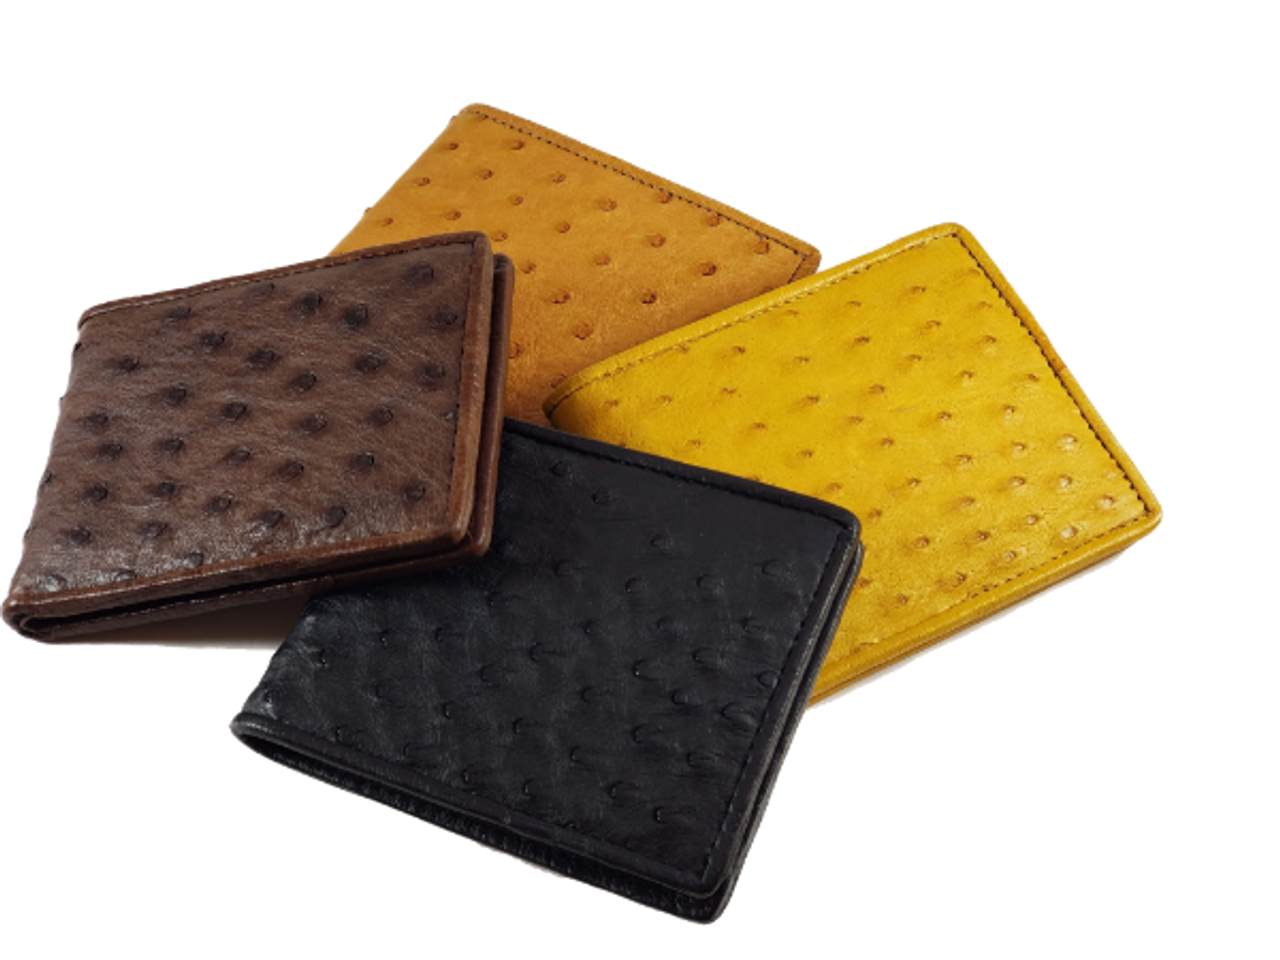 Ostrich Leather Wallet Mens Handmade in Los Angeles – orishandmade